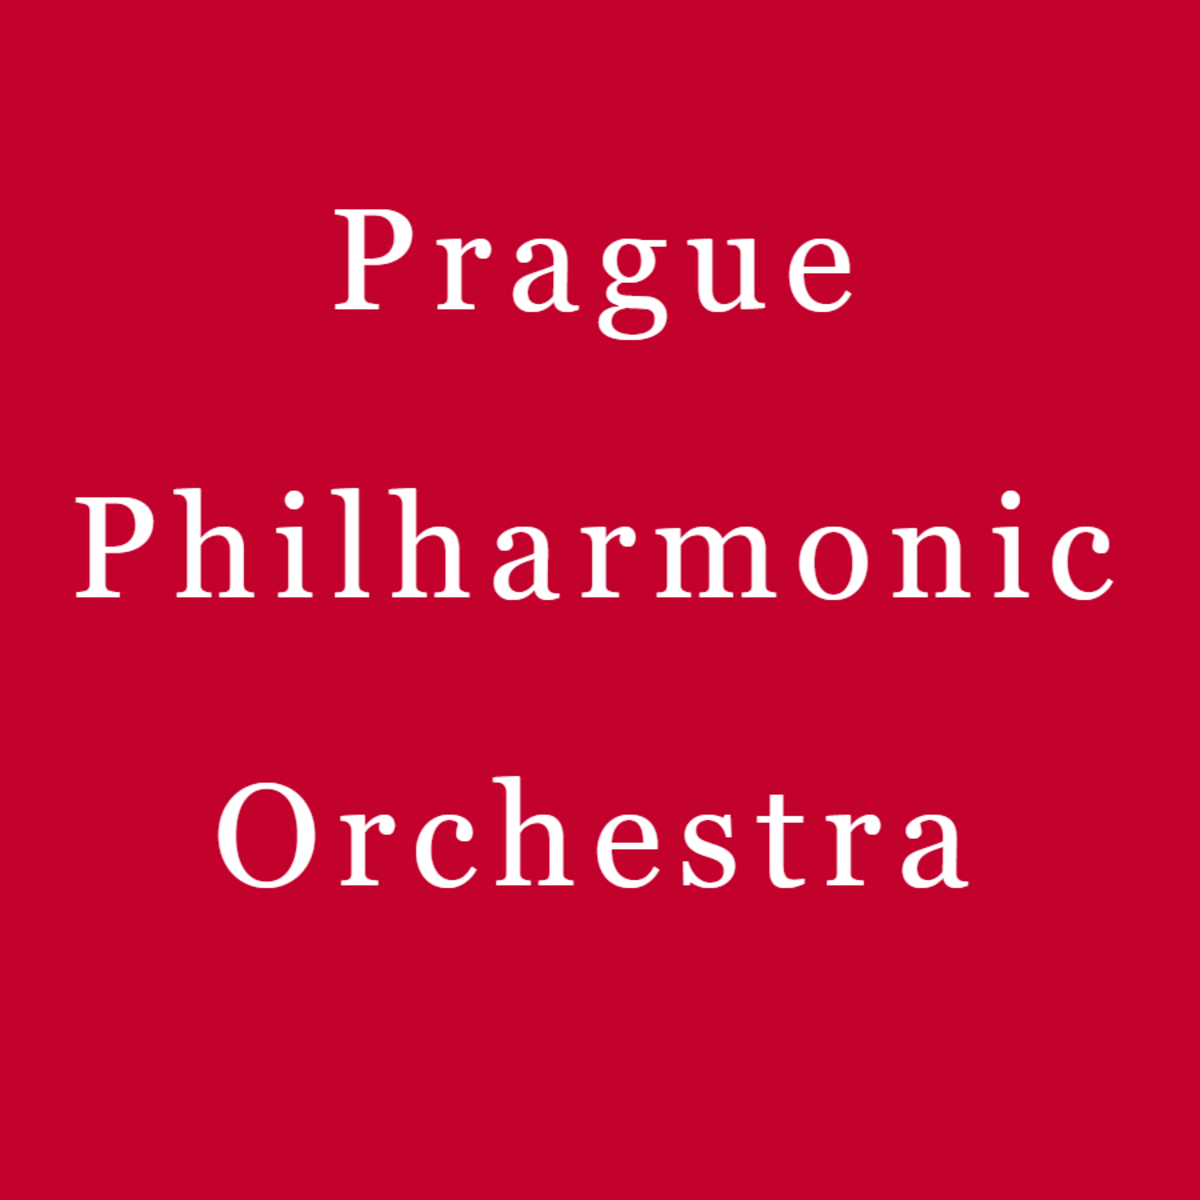 Prague Philharmonic Orchestra - The Essential James Bond [1997]